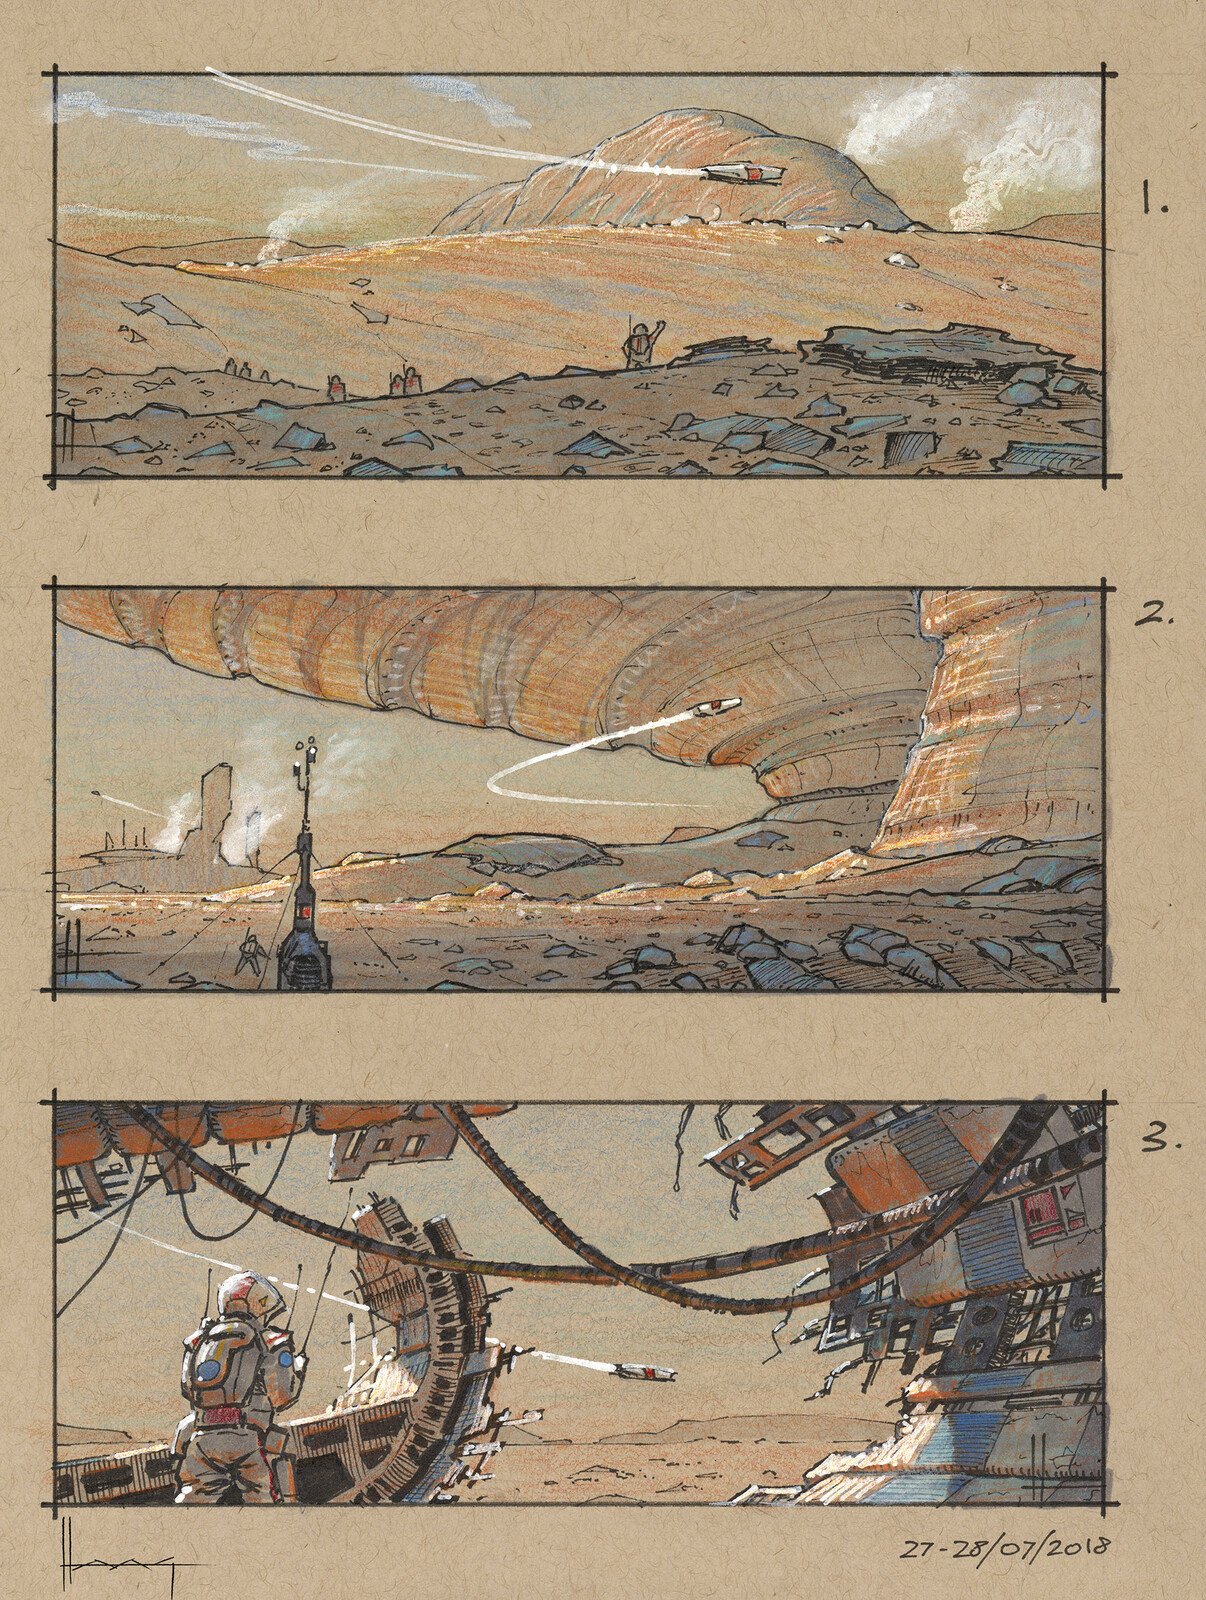 Three final panels.